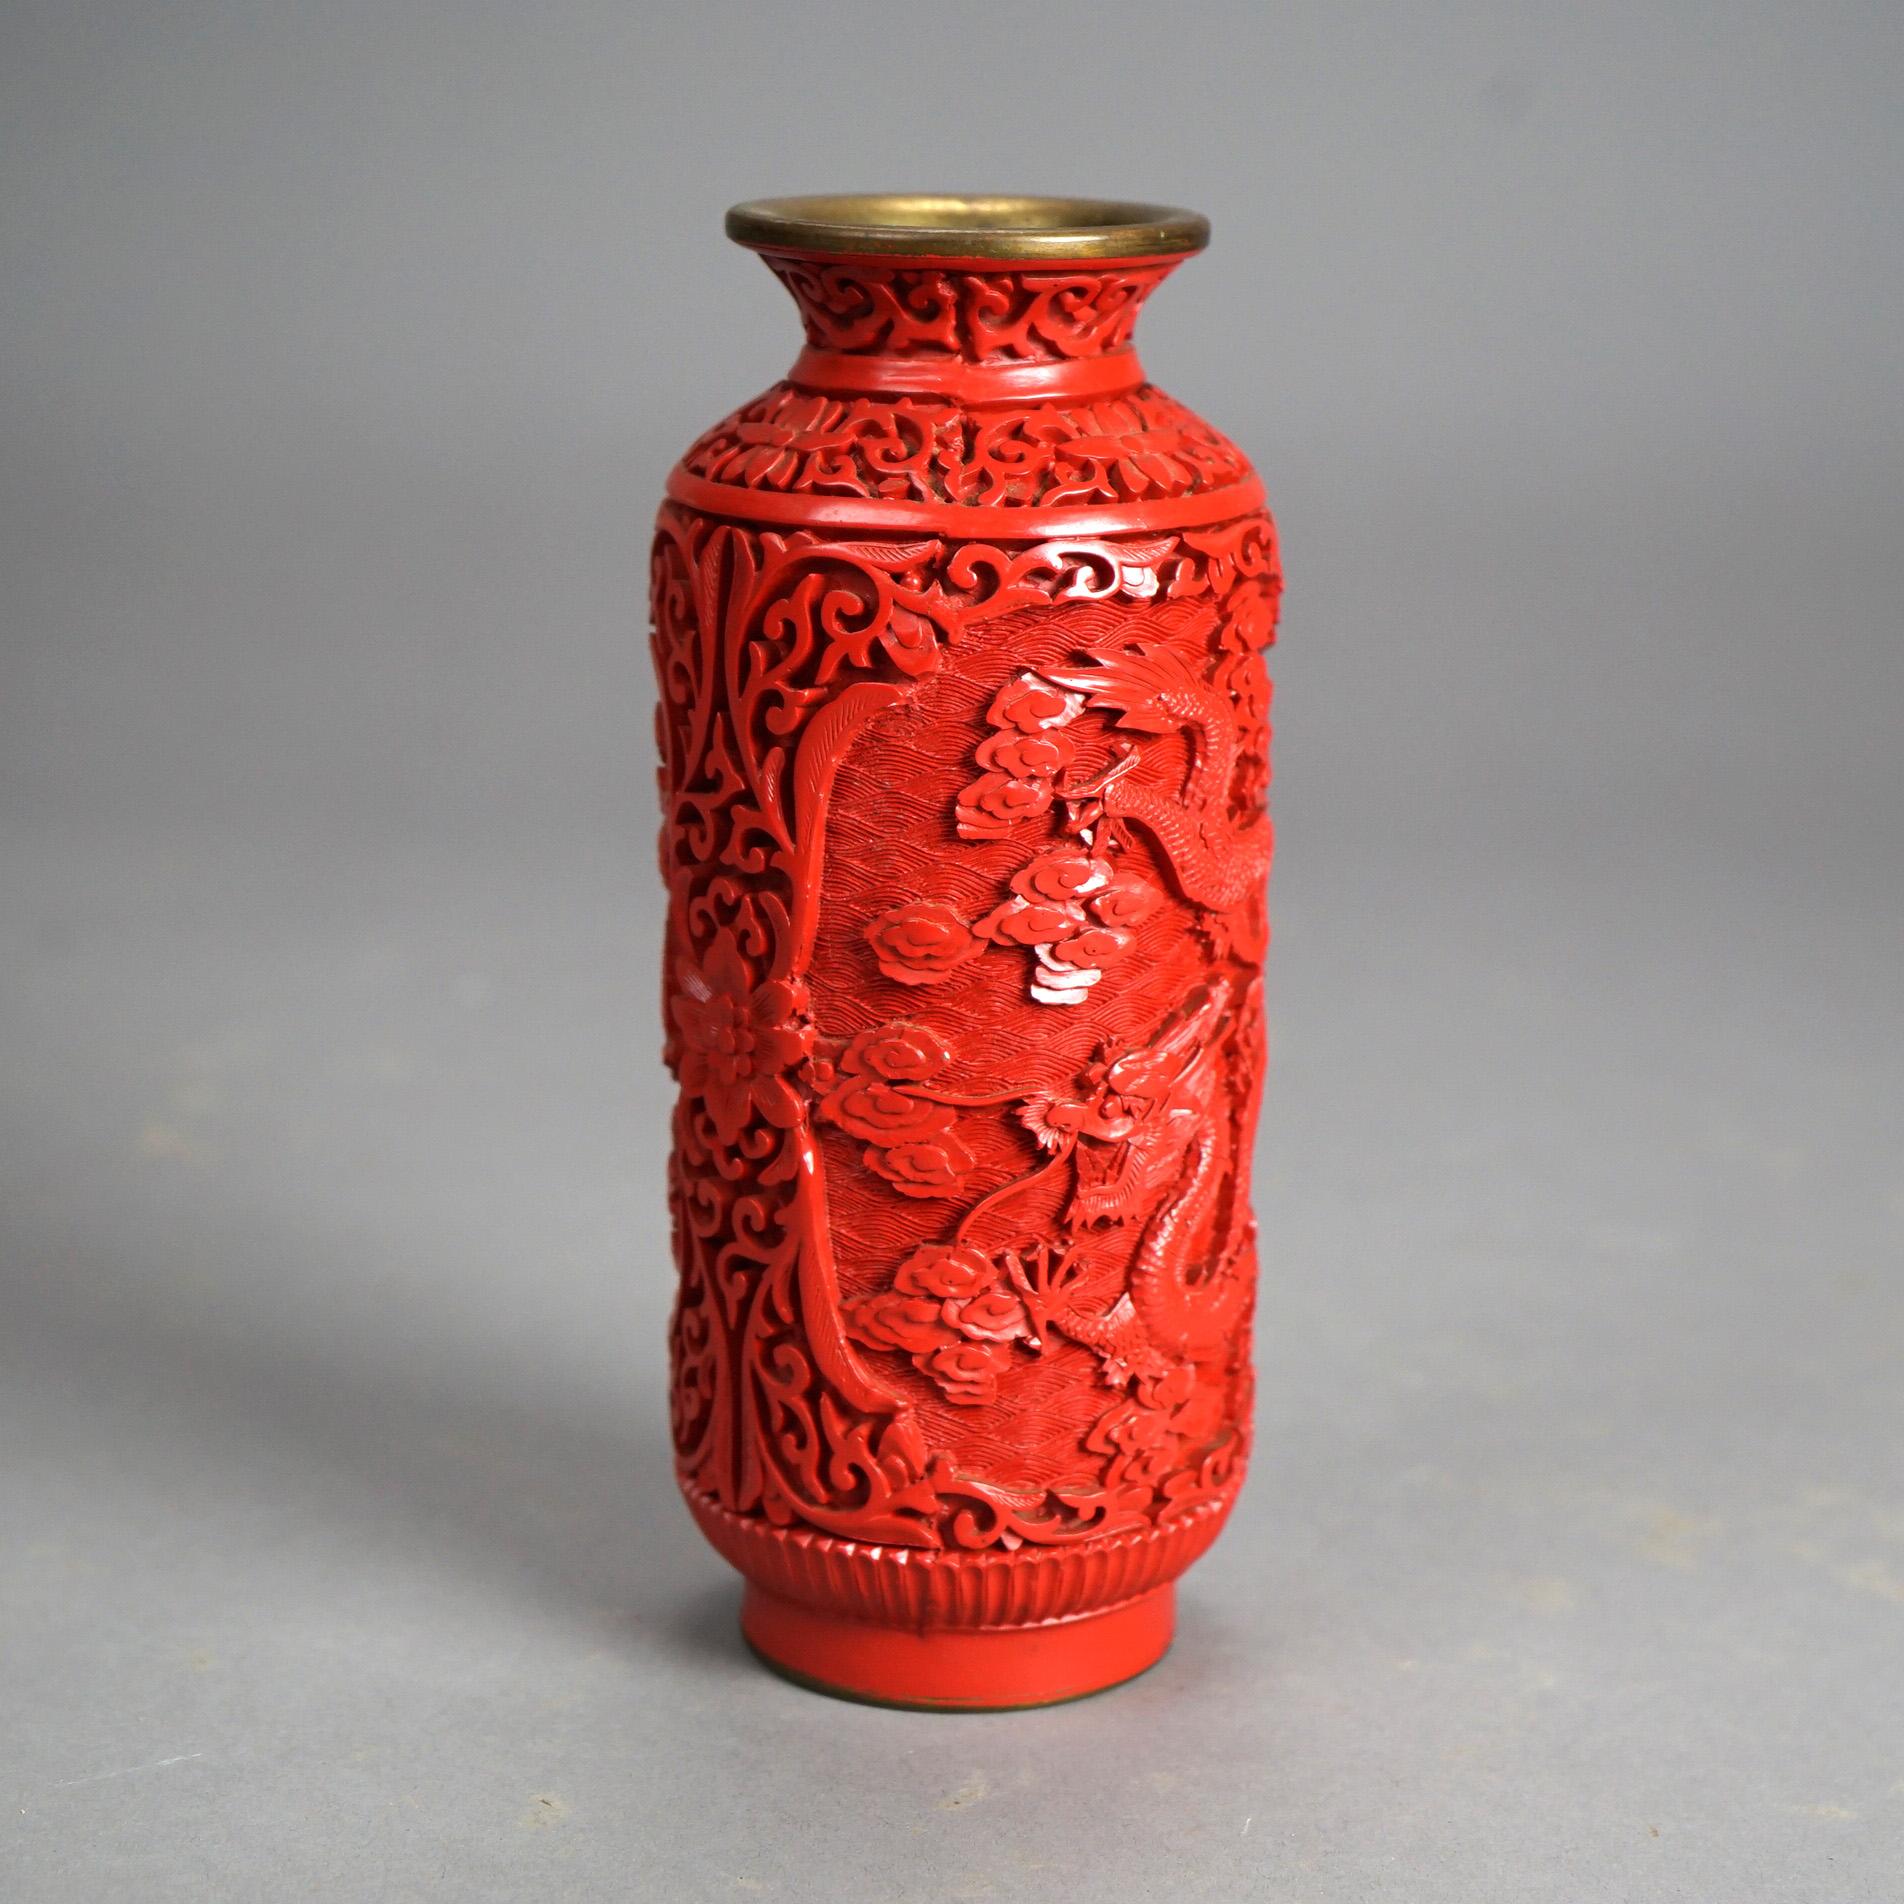 Antique Chinese Cinnabar Dragon Vase Circa 1920

Measures - 8